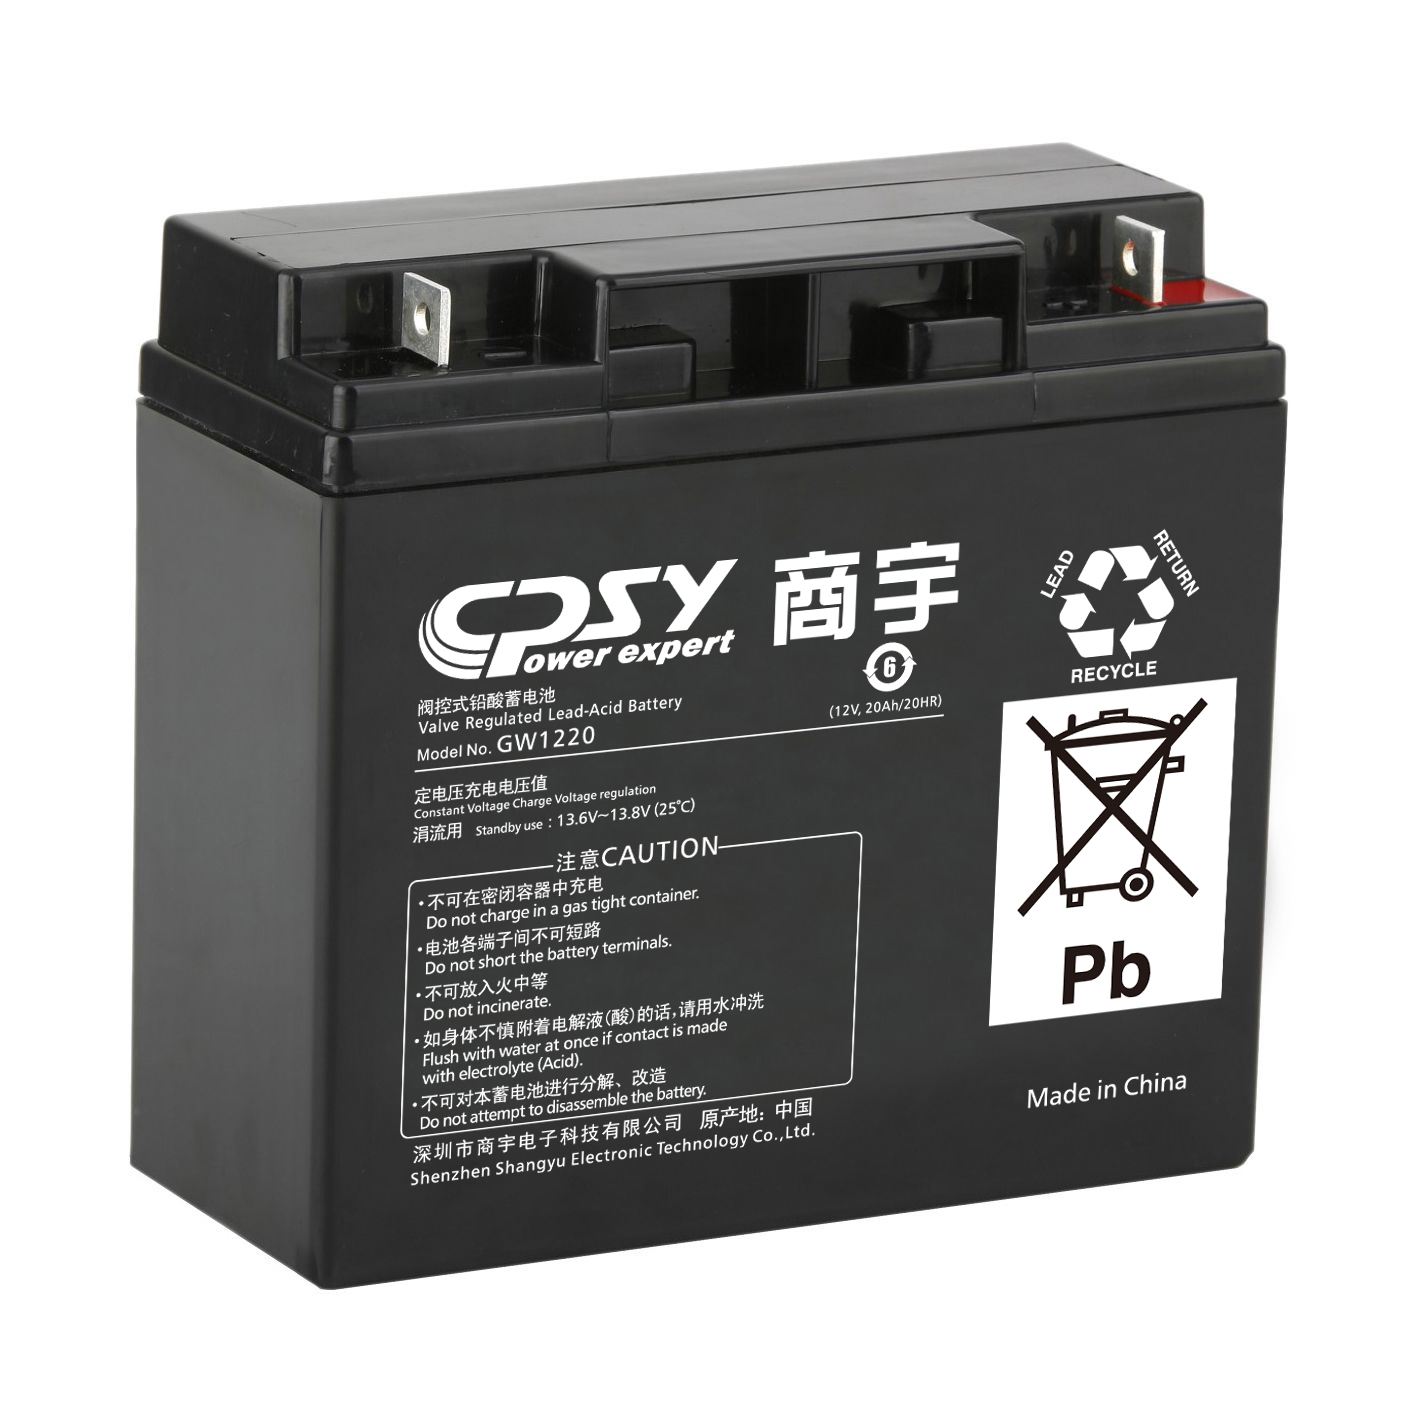 6-GFM-24商宇12V24AH蓄电池储存电池